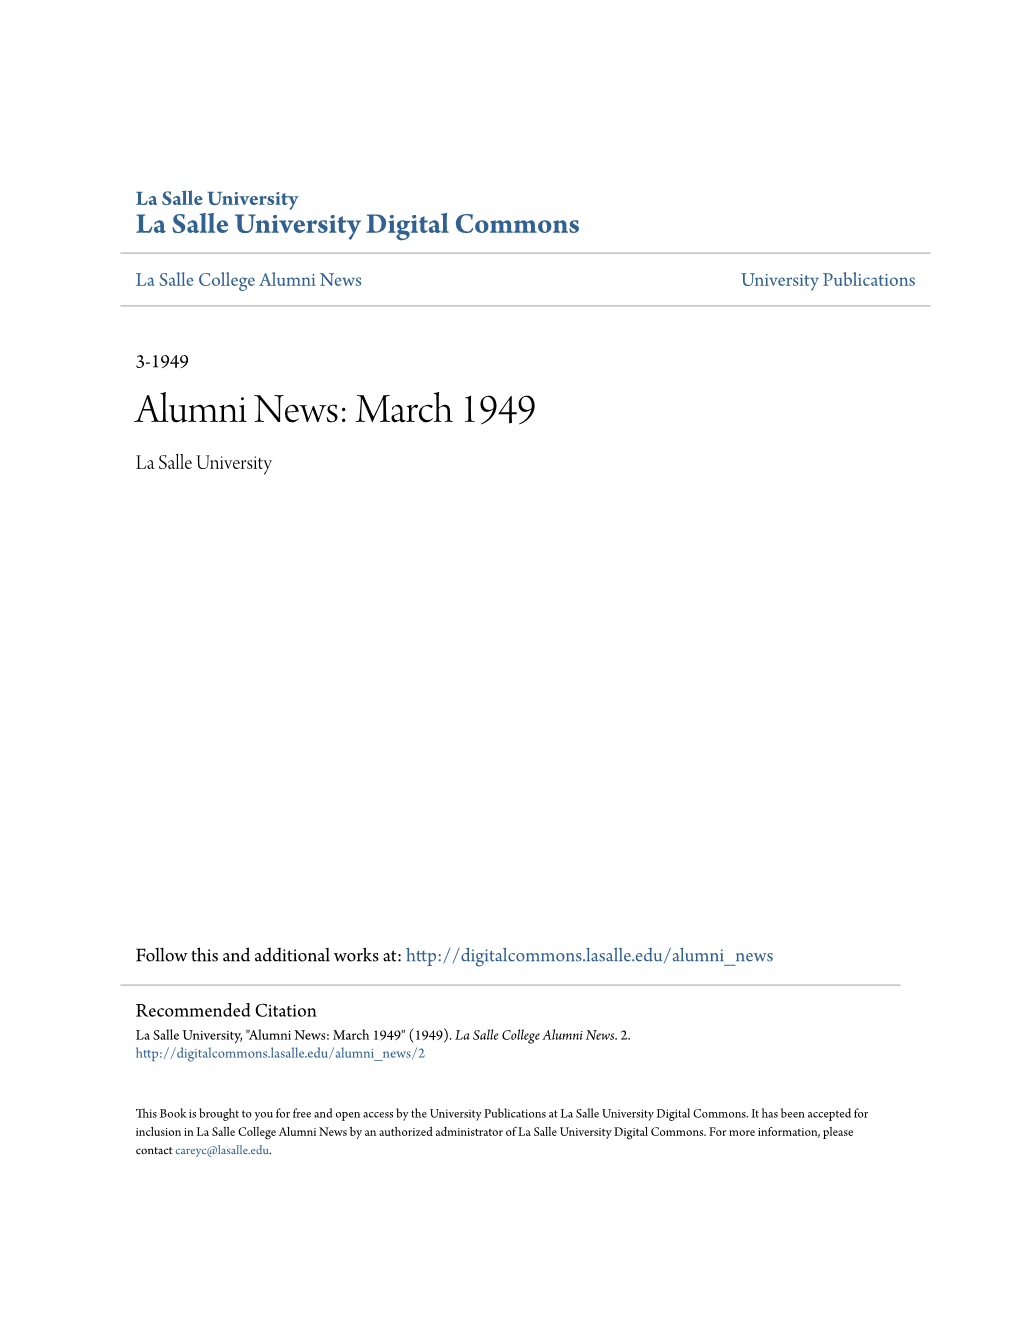 Alumni News University Publications